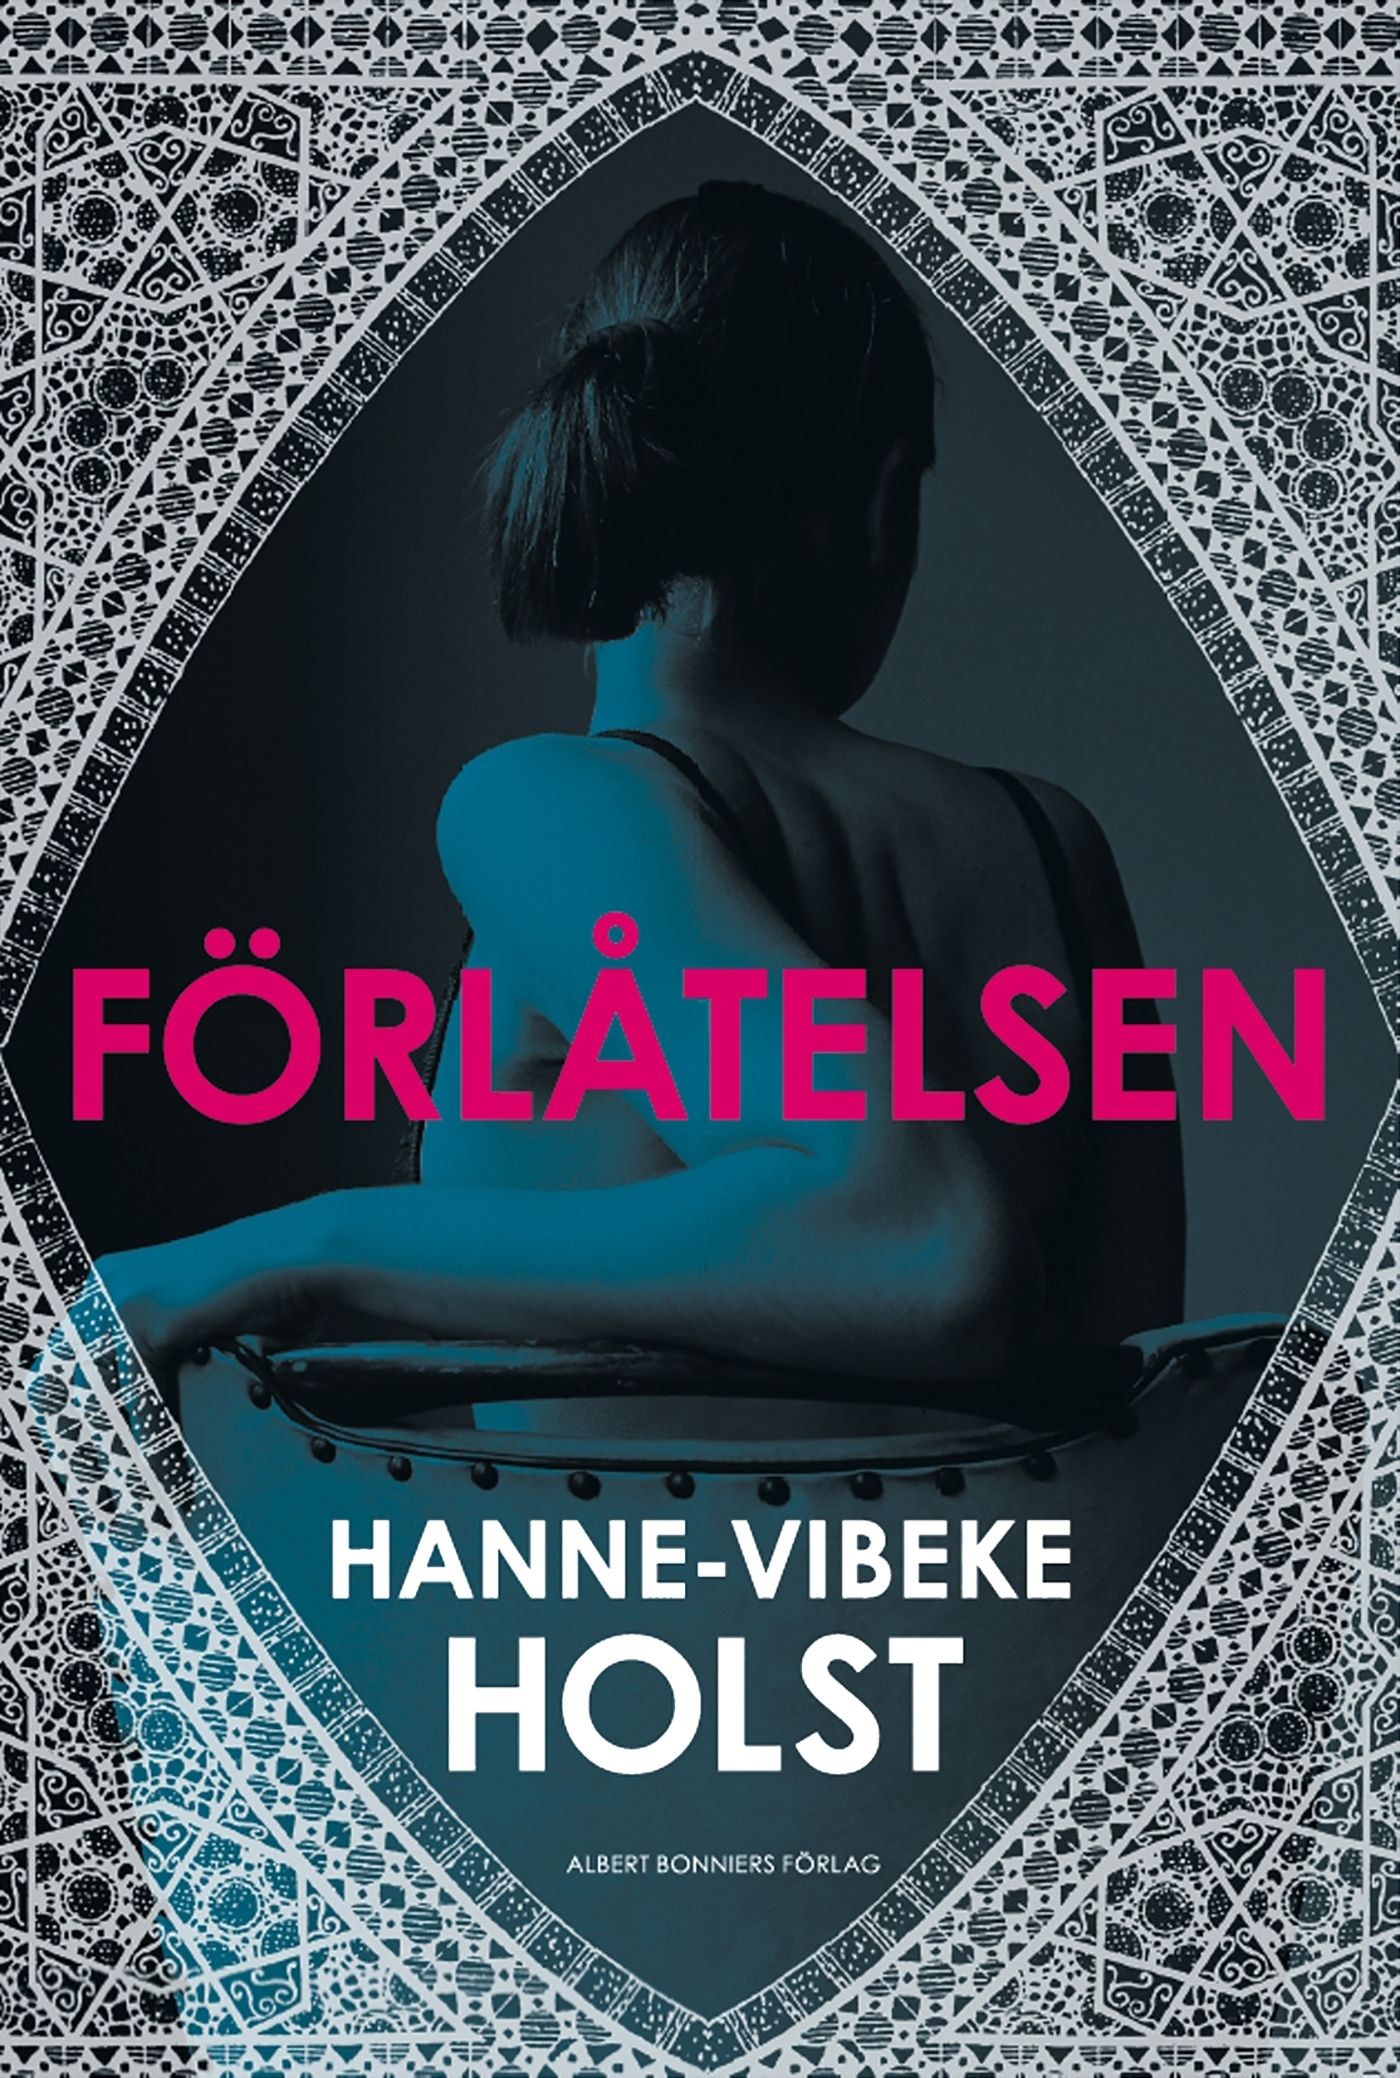 Förlåtelsen, eBook by Hanne-Vibeke Holst